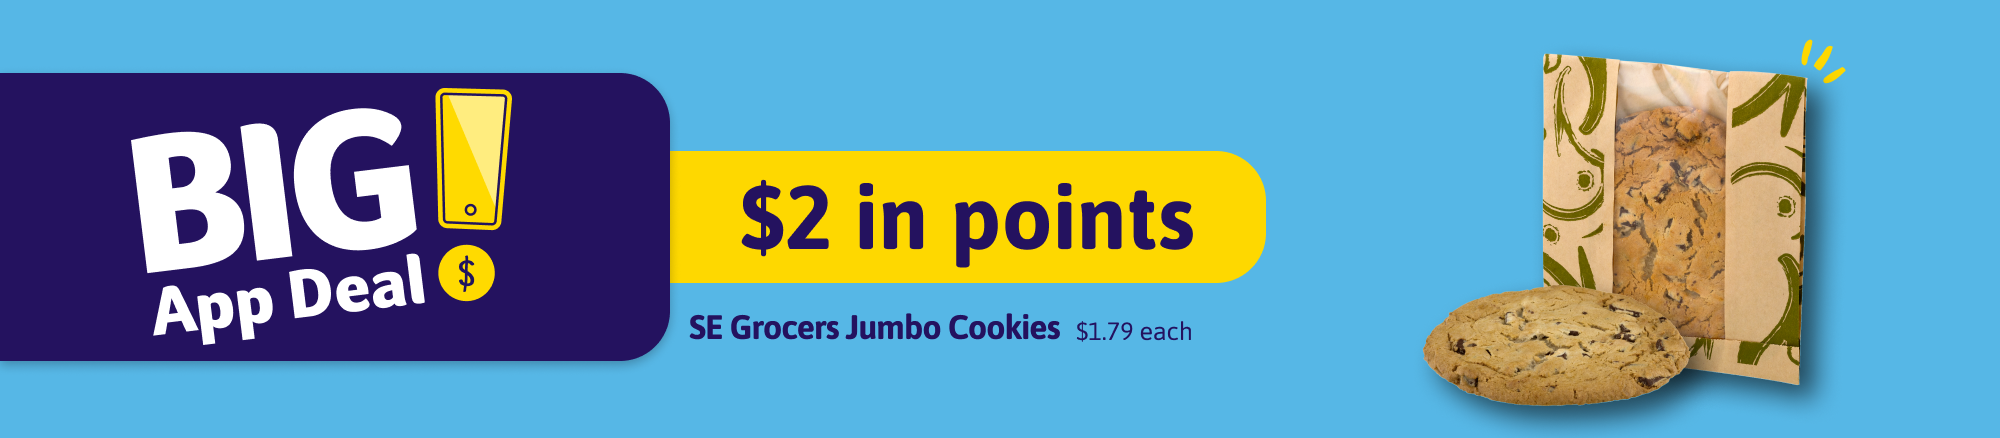 Big App Deal! SE Grocers Jumbo Cookies. $2 in points.